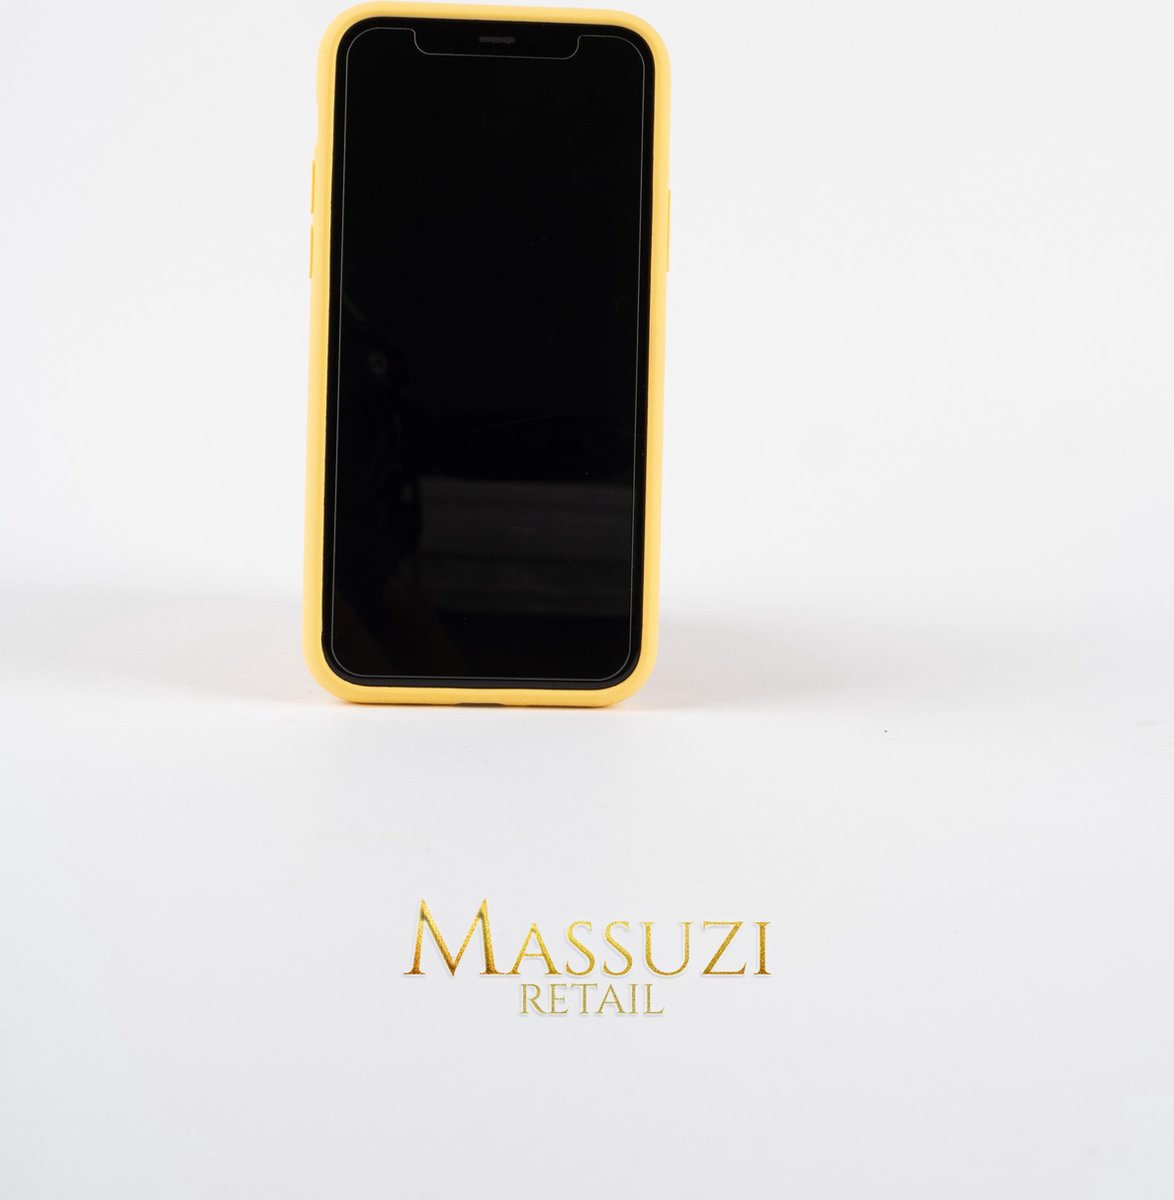 2-in-1 Massuzi iPhone 11 - Silicone Hoesje Case Geel (1 stuk) + Gratis Glass Screenprotector (3 stuks) - Tempered Glass Screenprotector met Yellow Siliconen Backcover Case